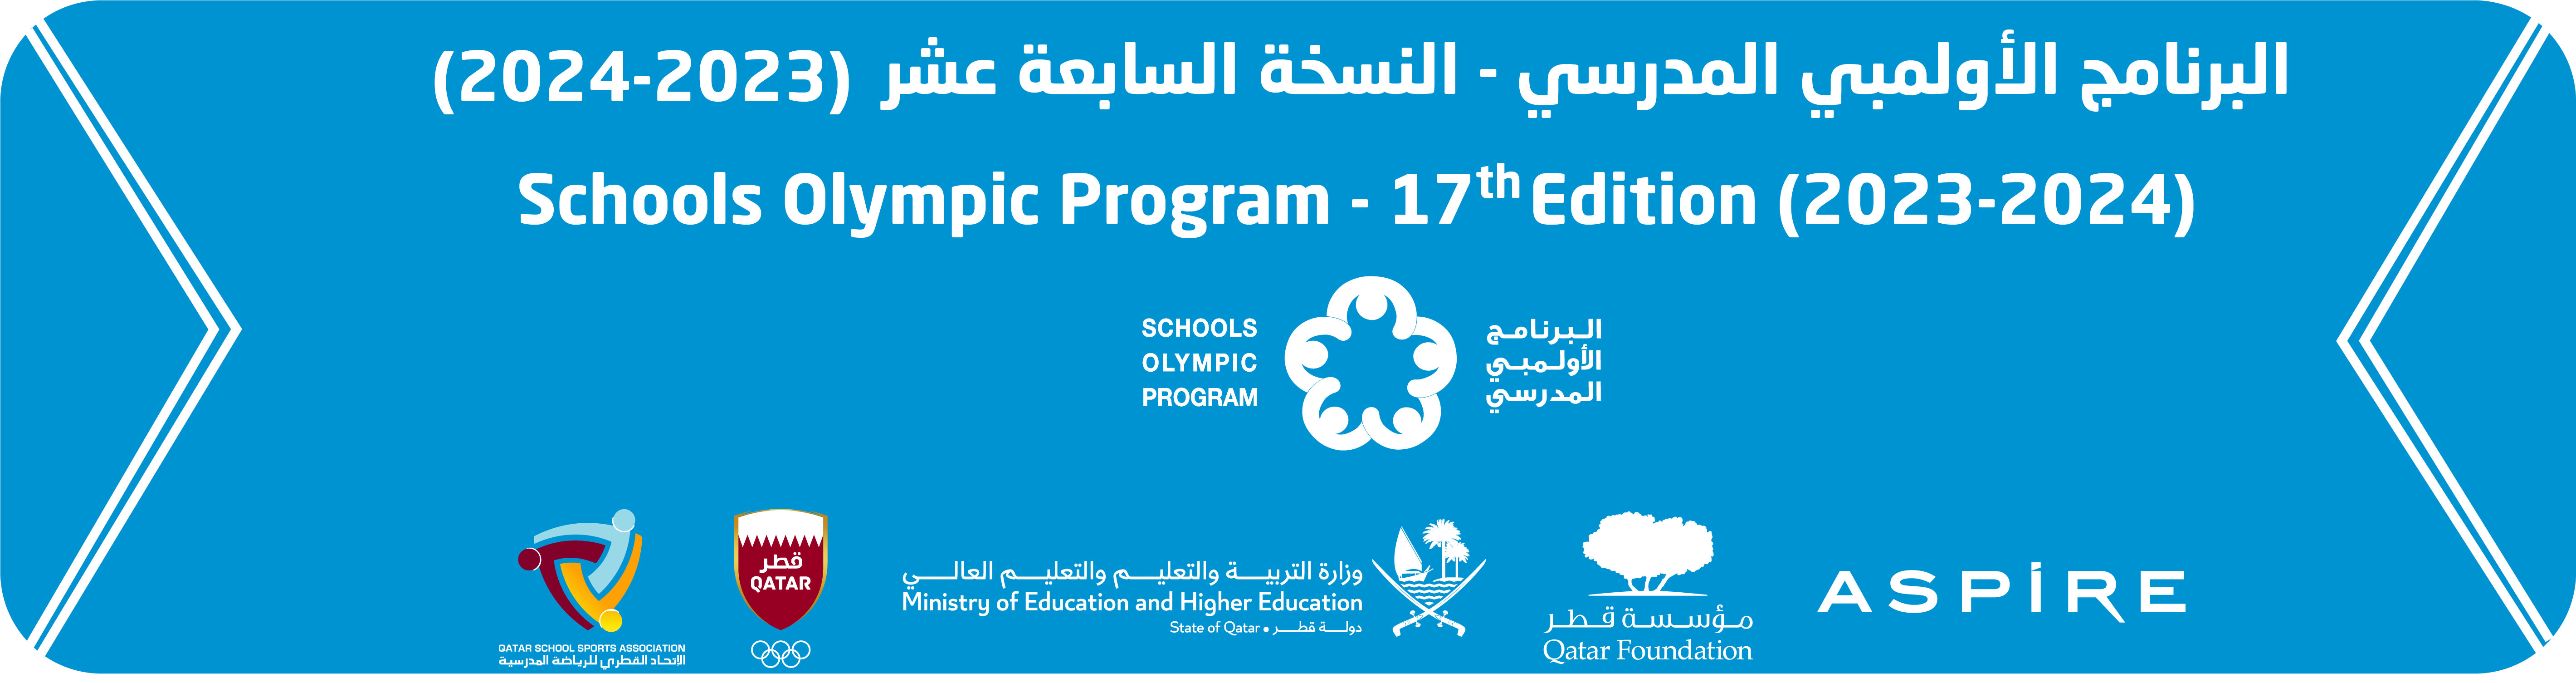 School Olympic program